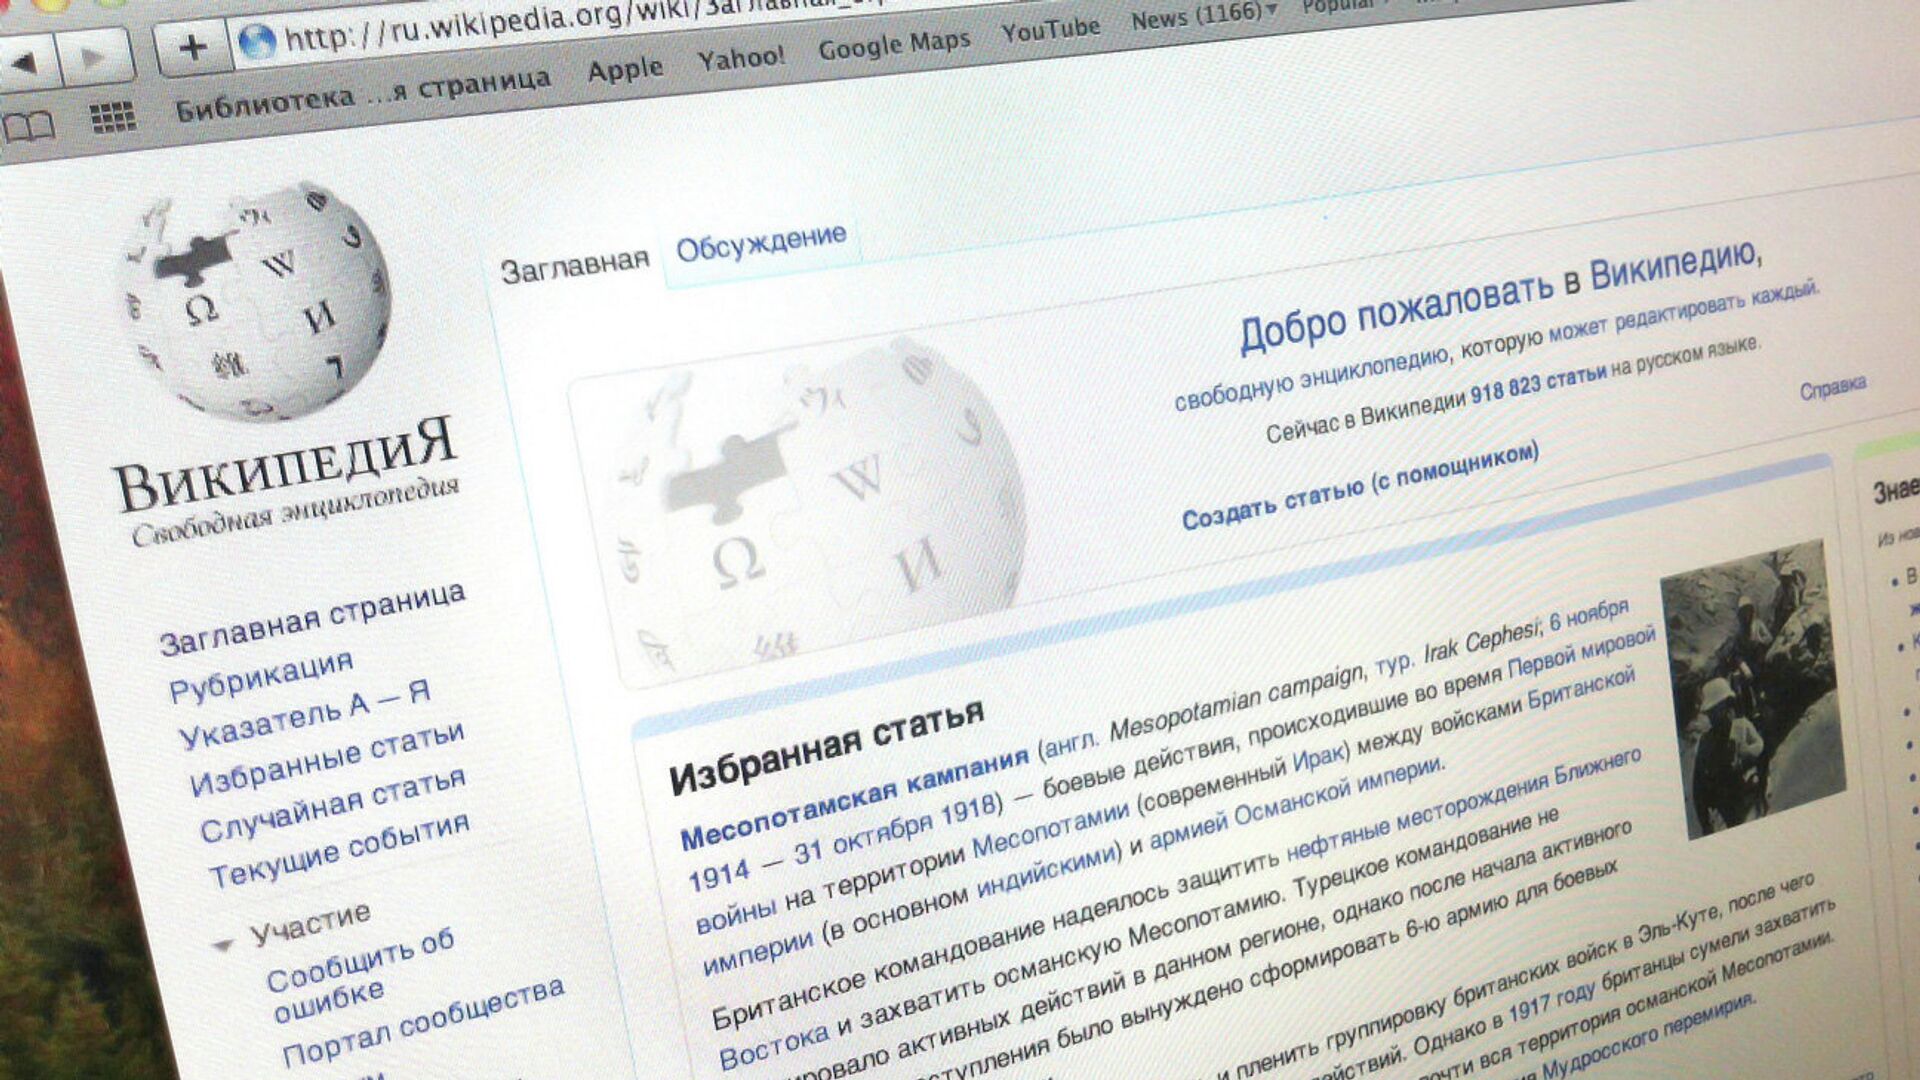 Https ru wikipedia org w. Статья Википедия. Википедия свободная энциклопедия. Википедия. Wiki.